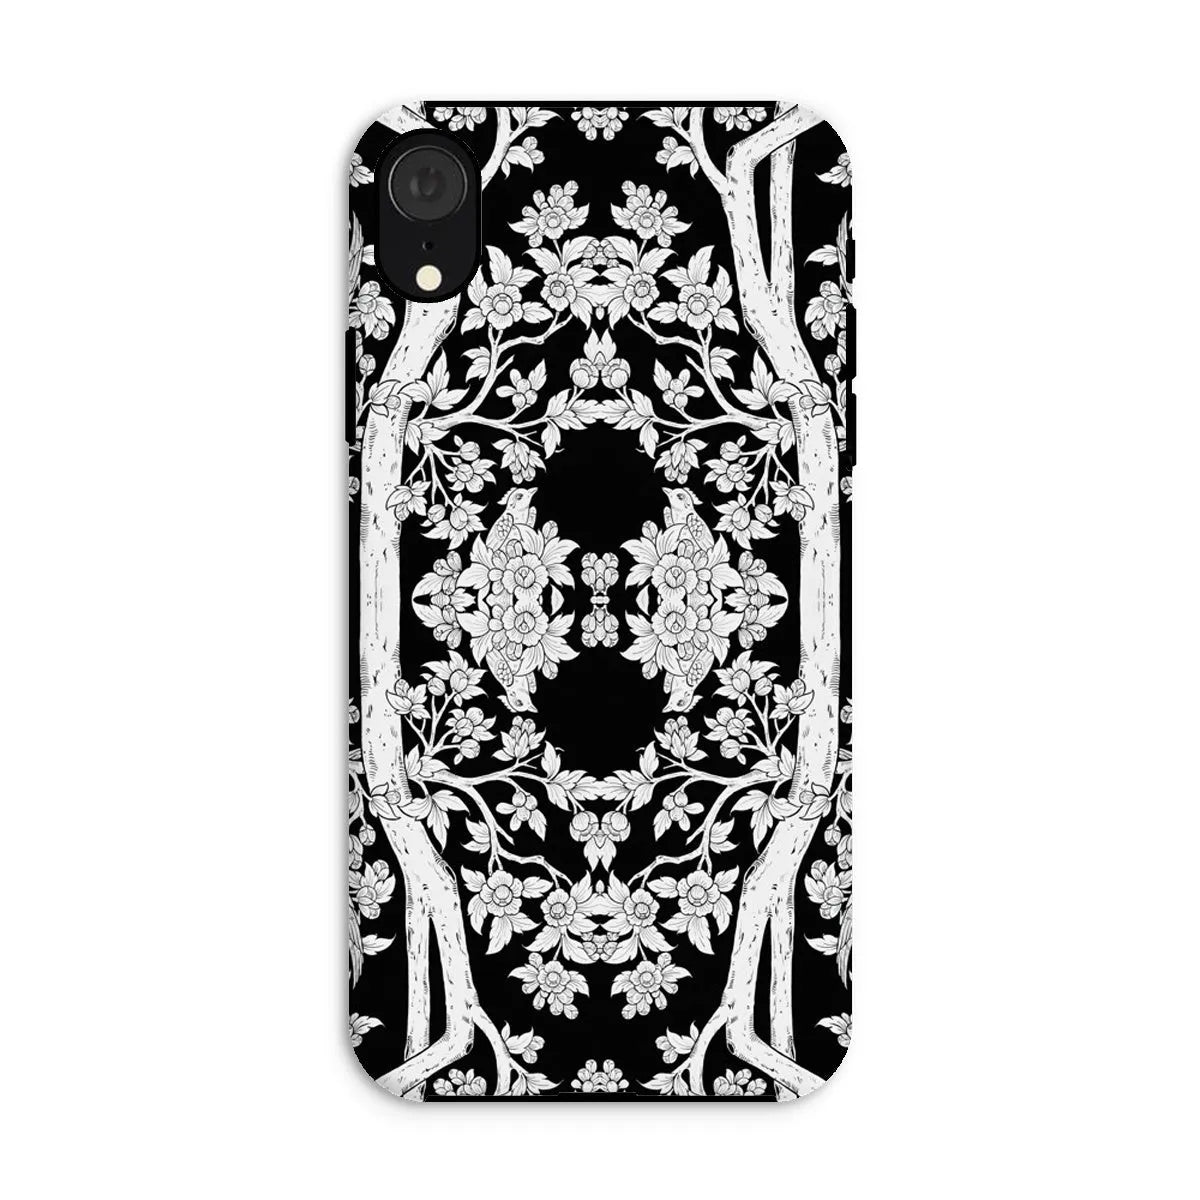 Aviary Black Aesthetic Pattern Art Phone Case - Iphone Xr / Matte - Mobile Phone Cases - Aesthetic Art